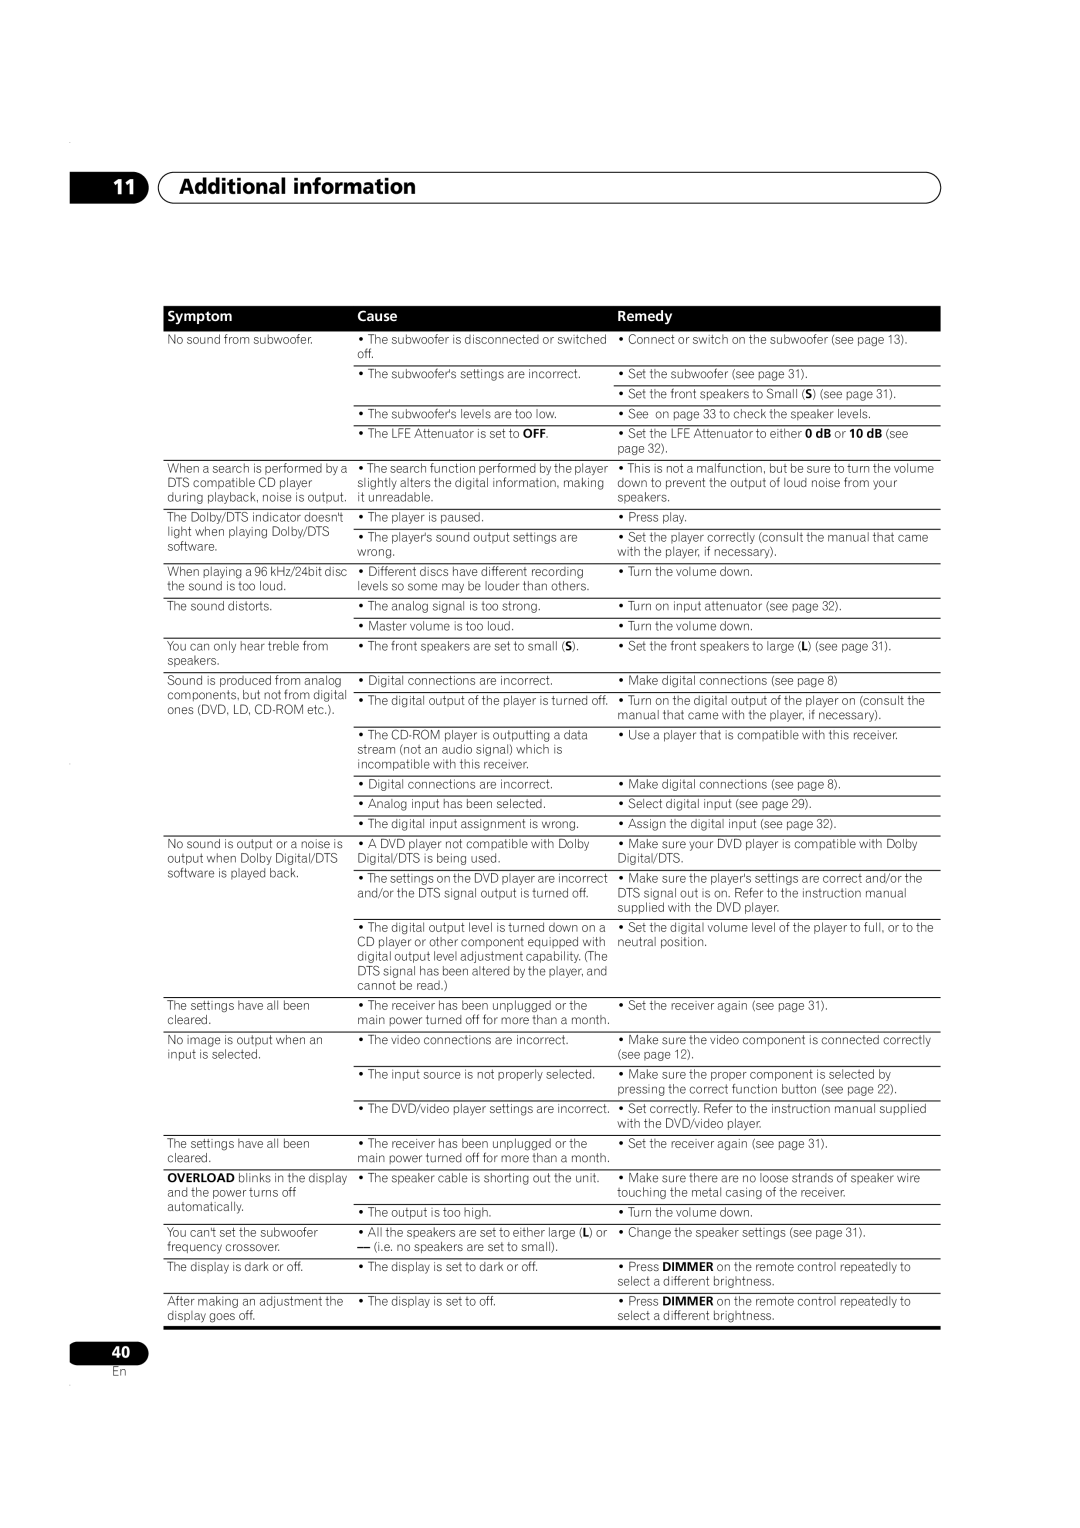 Pioneer VSX-C301 manual Additional information, Symptom, Cause, Remedy 